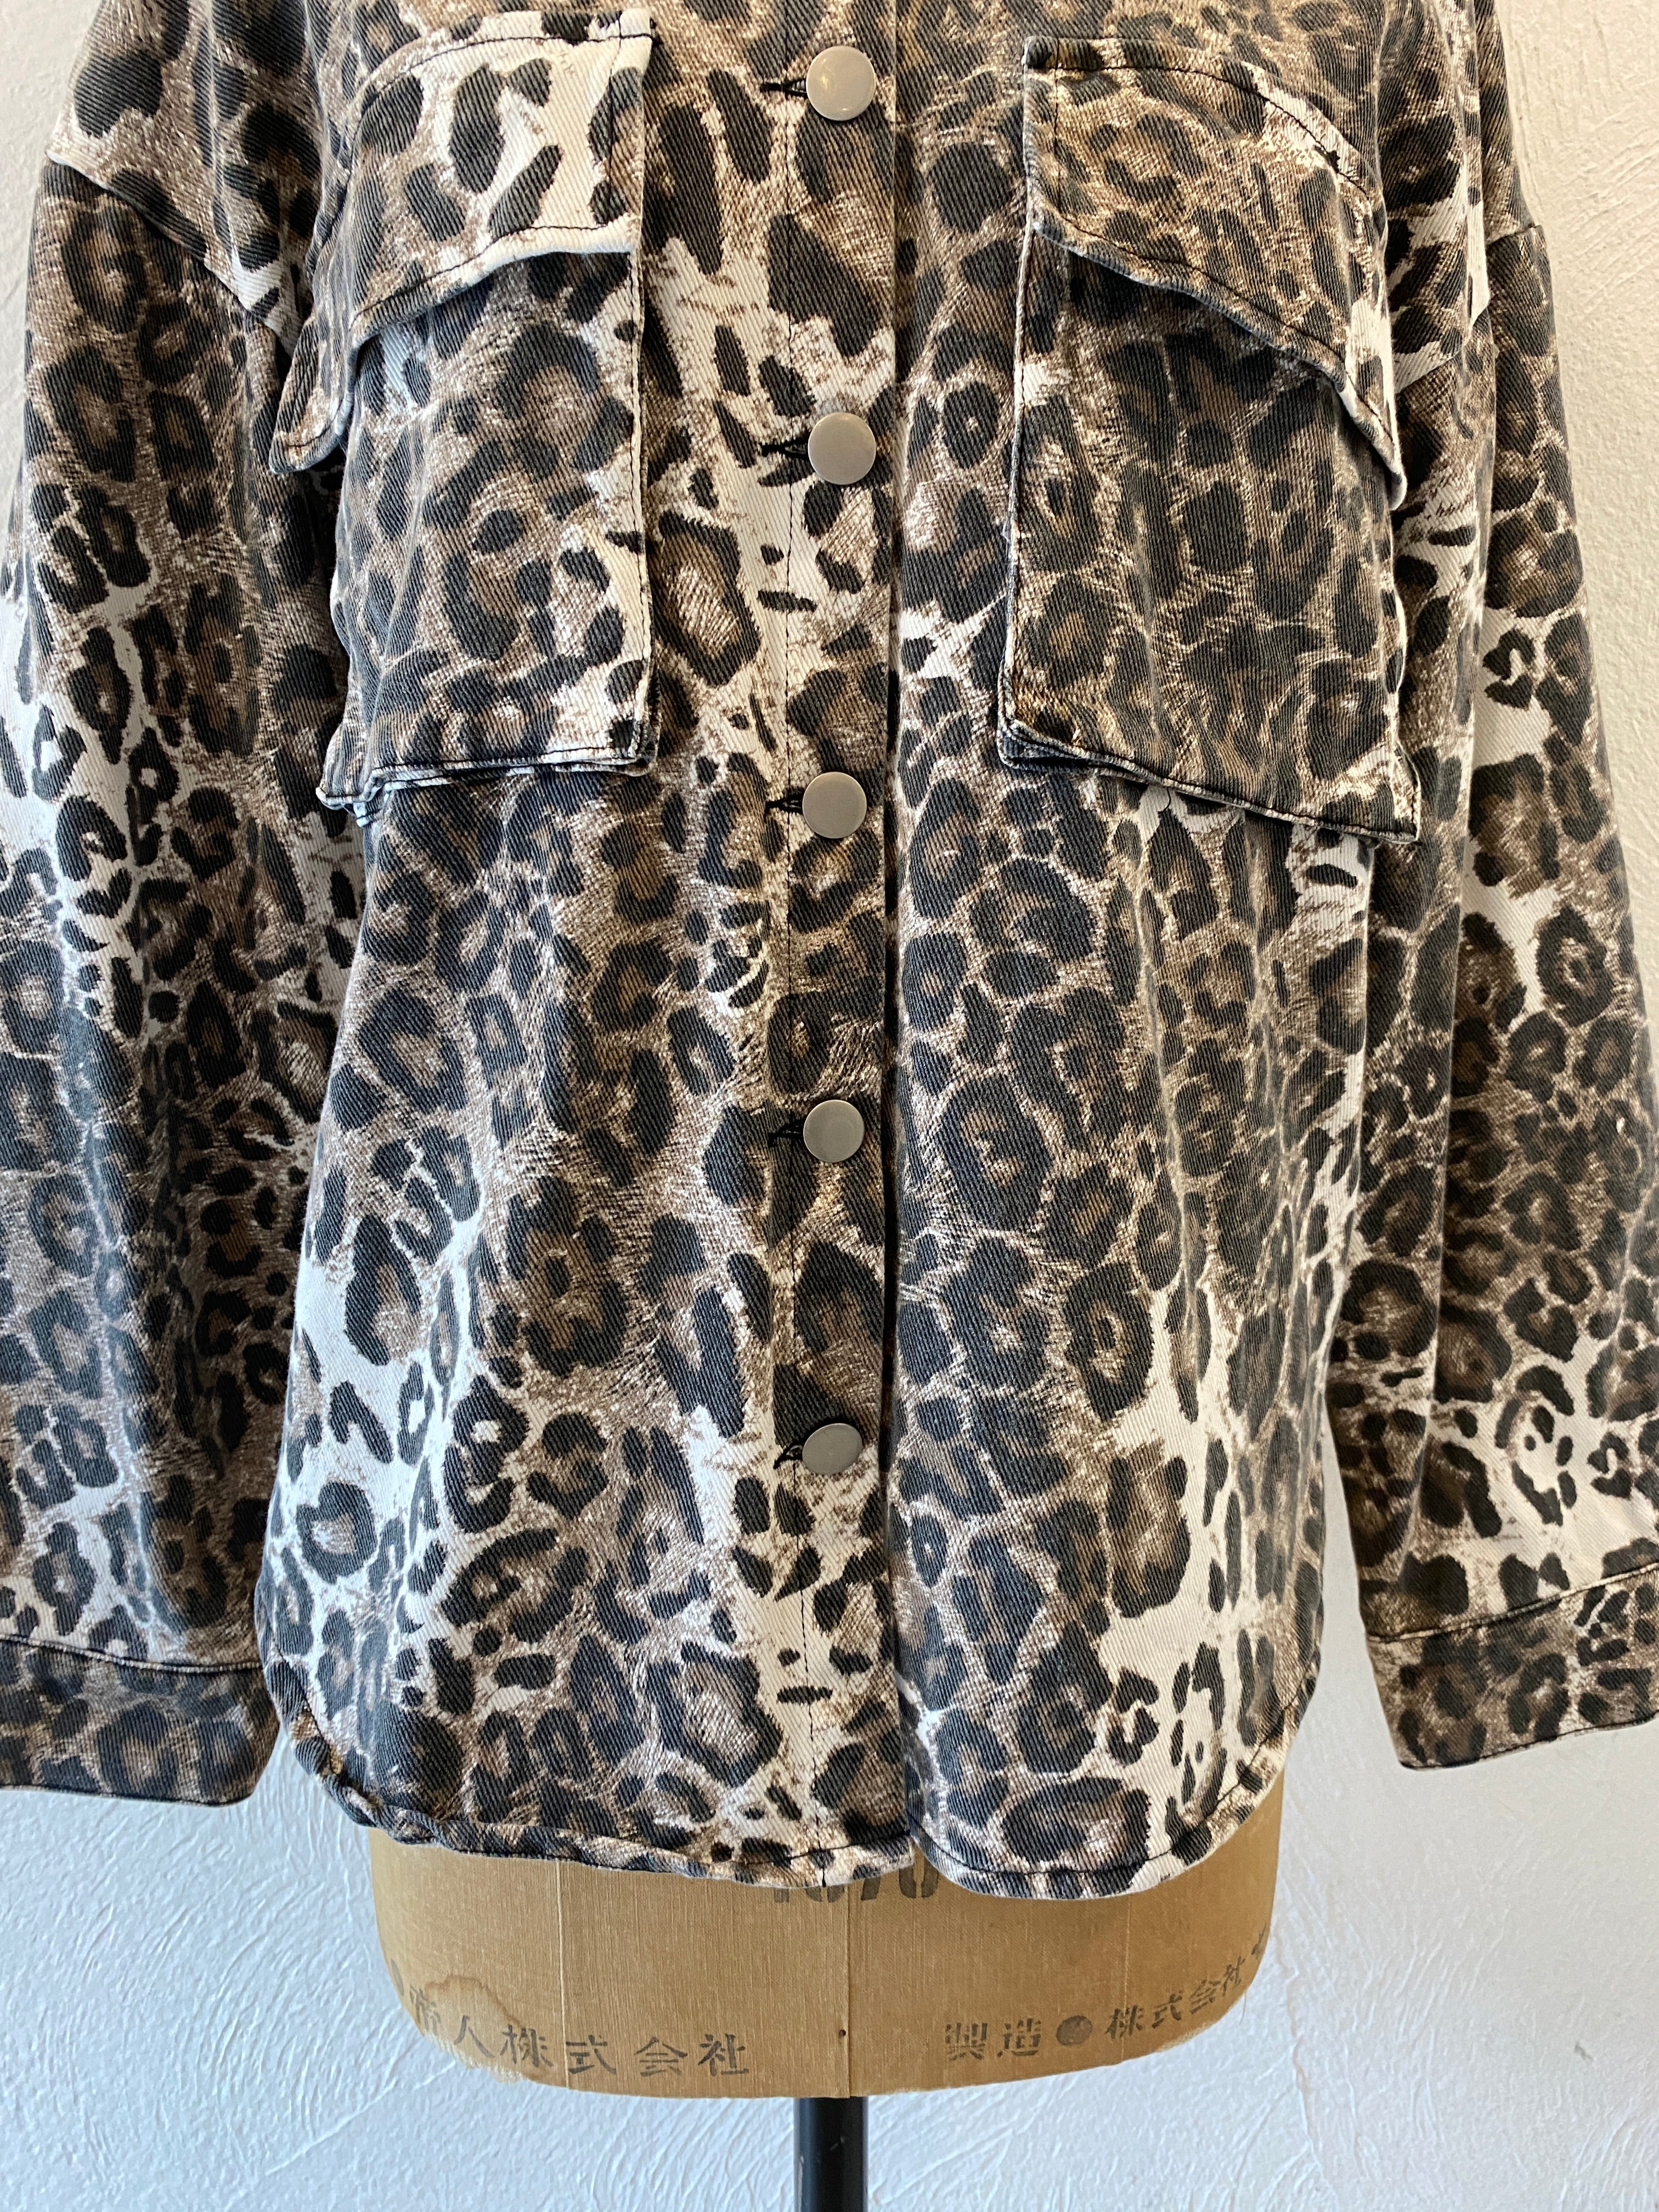 leopard shirts jacket